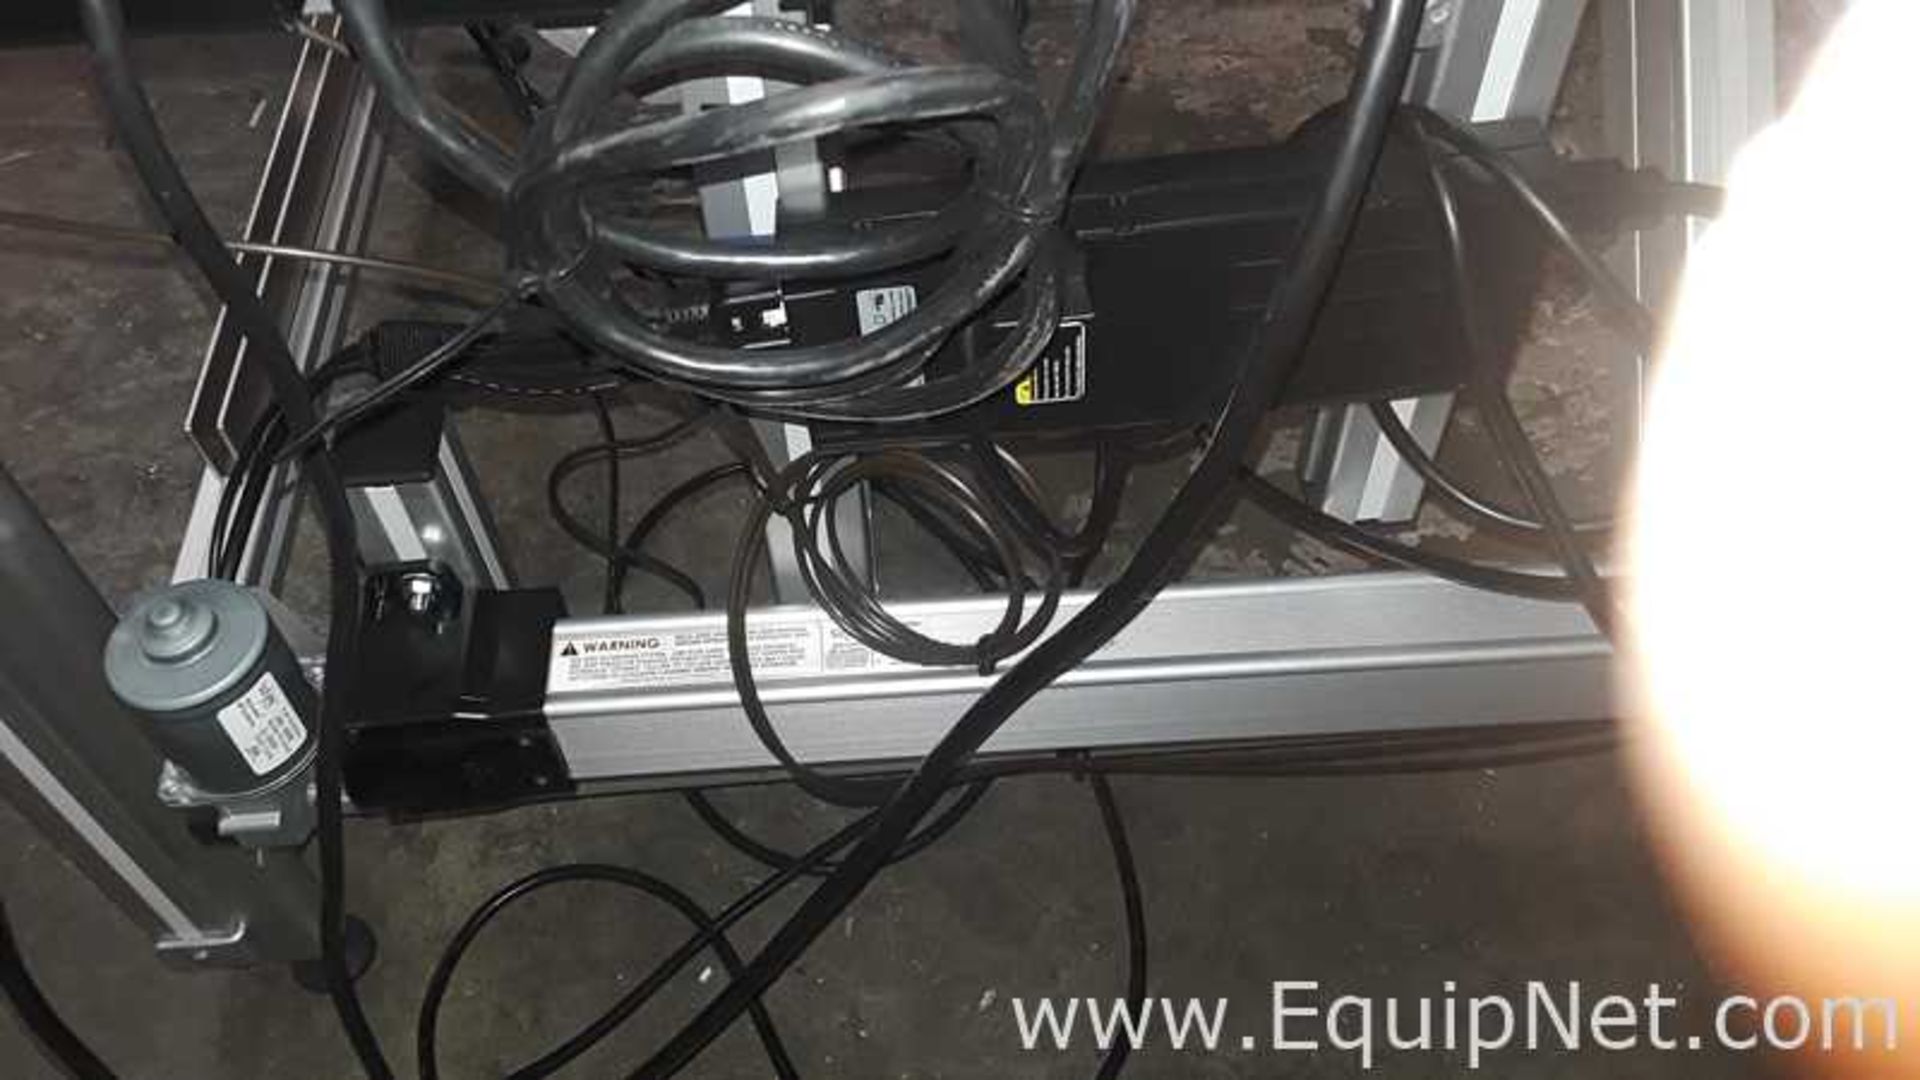 SencorpWhite 12AS|2 Heat Sealer on Workstation - Image 7 of 9